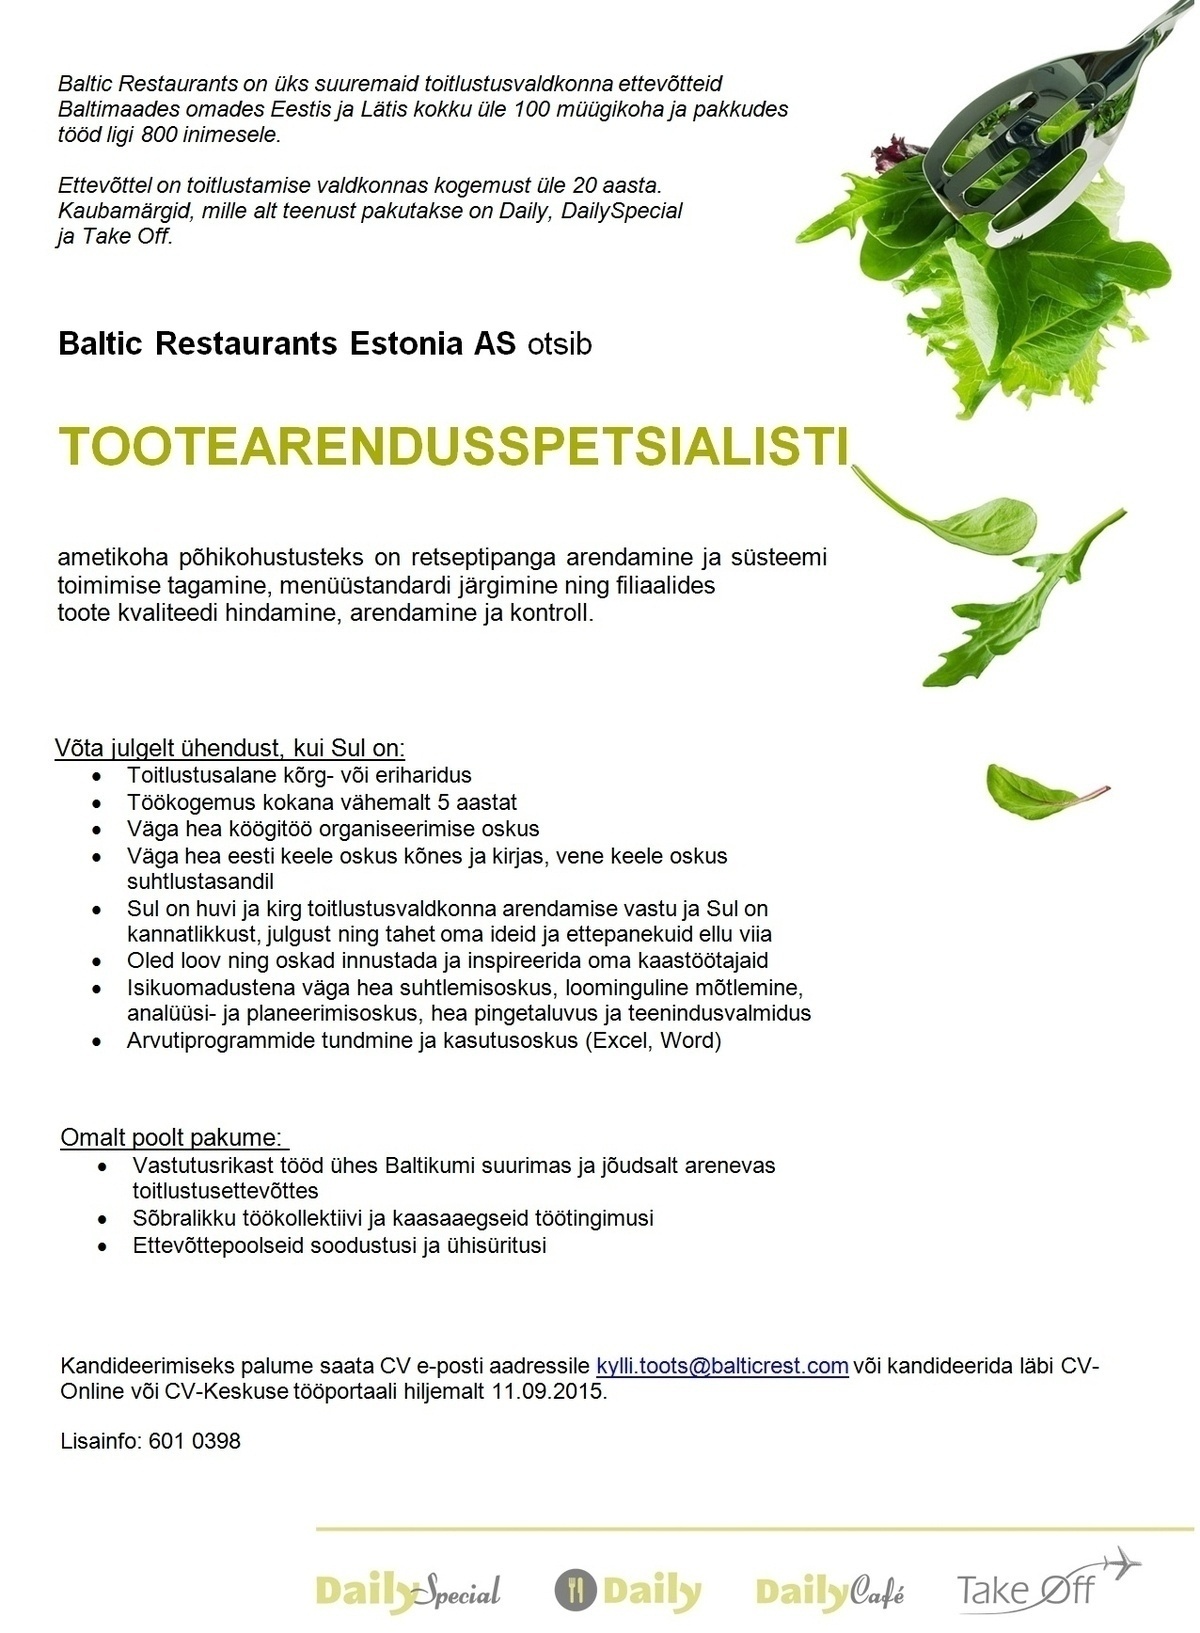 BALTIC RESTAURANTS ESTONIA AS Tootearendusspetsialist